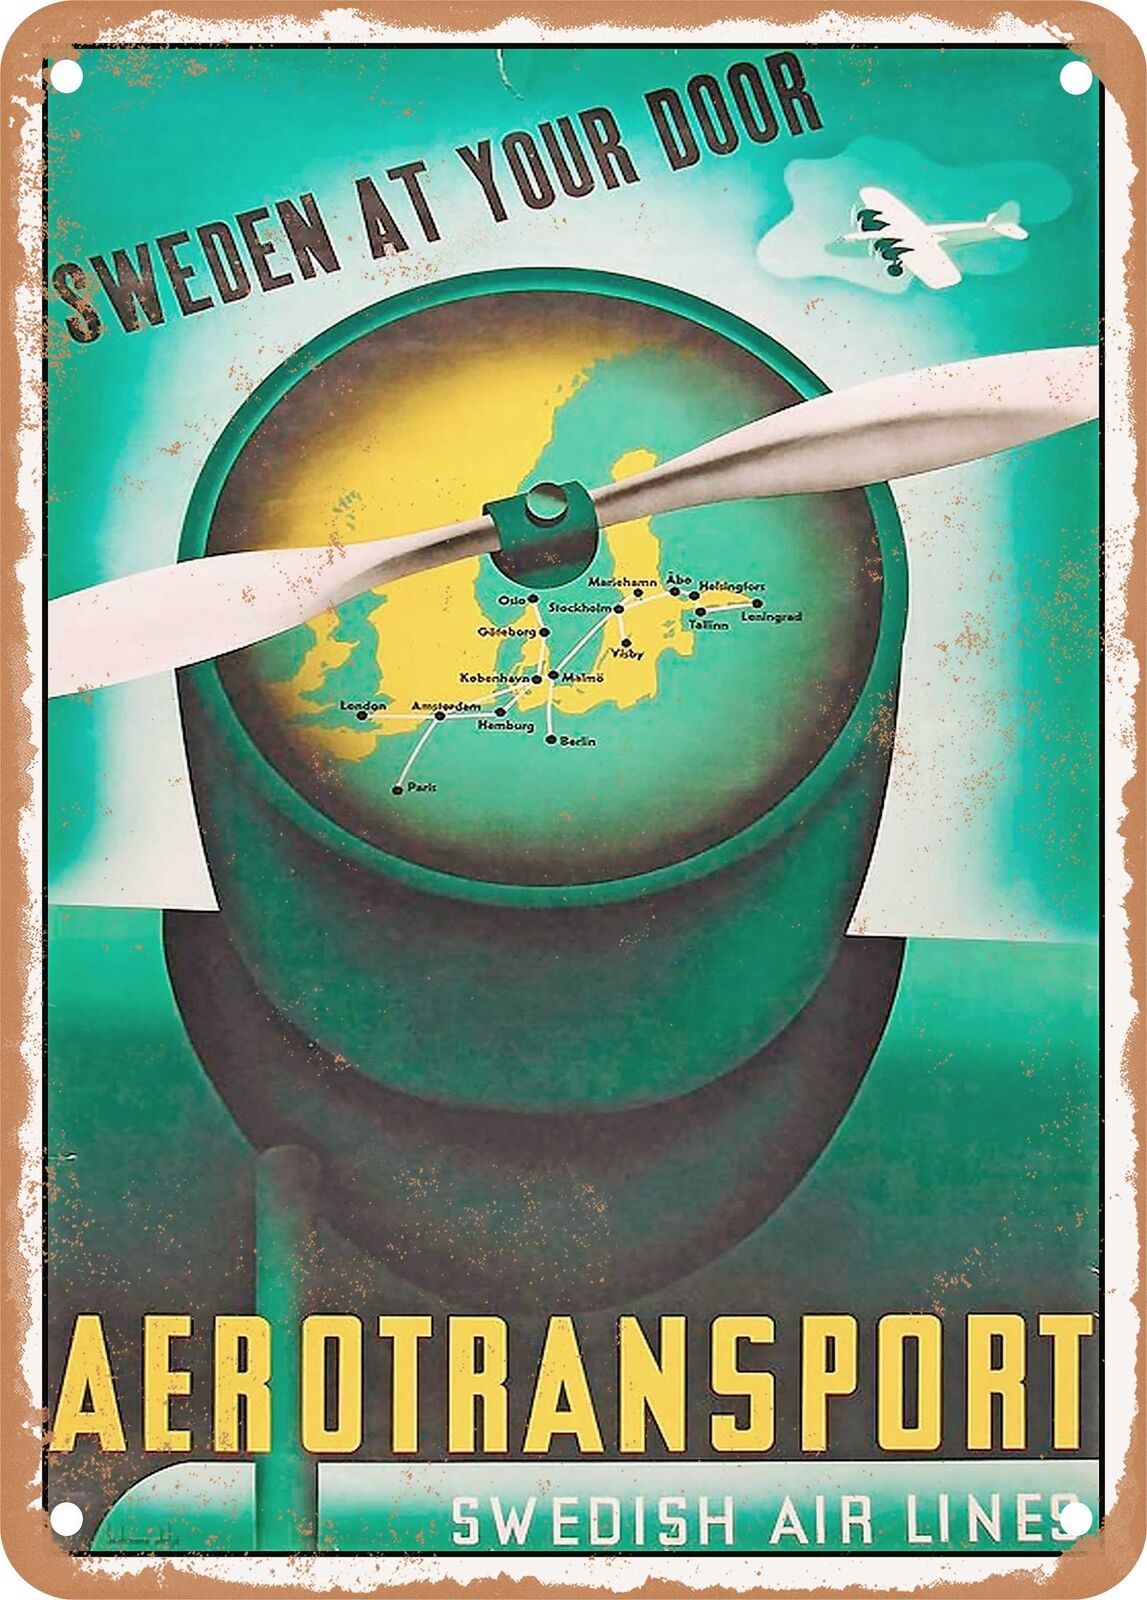 METAL SIGN - 1948 Sweden at Your Door Aerotransport Swedish Air Lines Vintage Ad